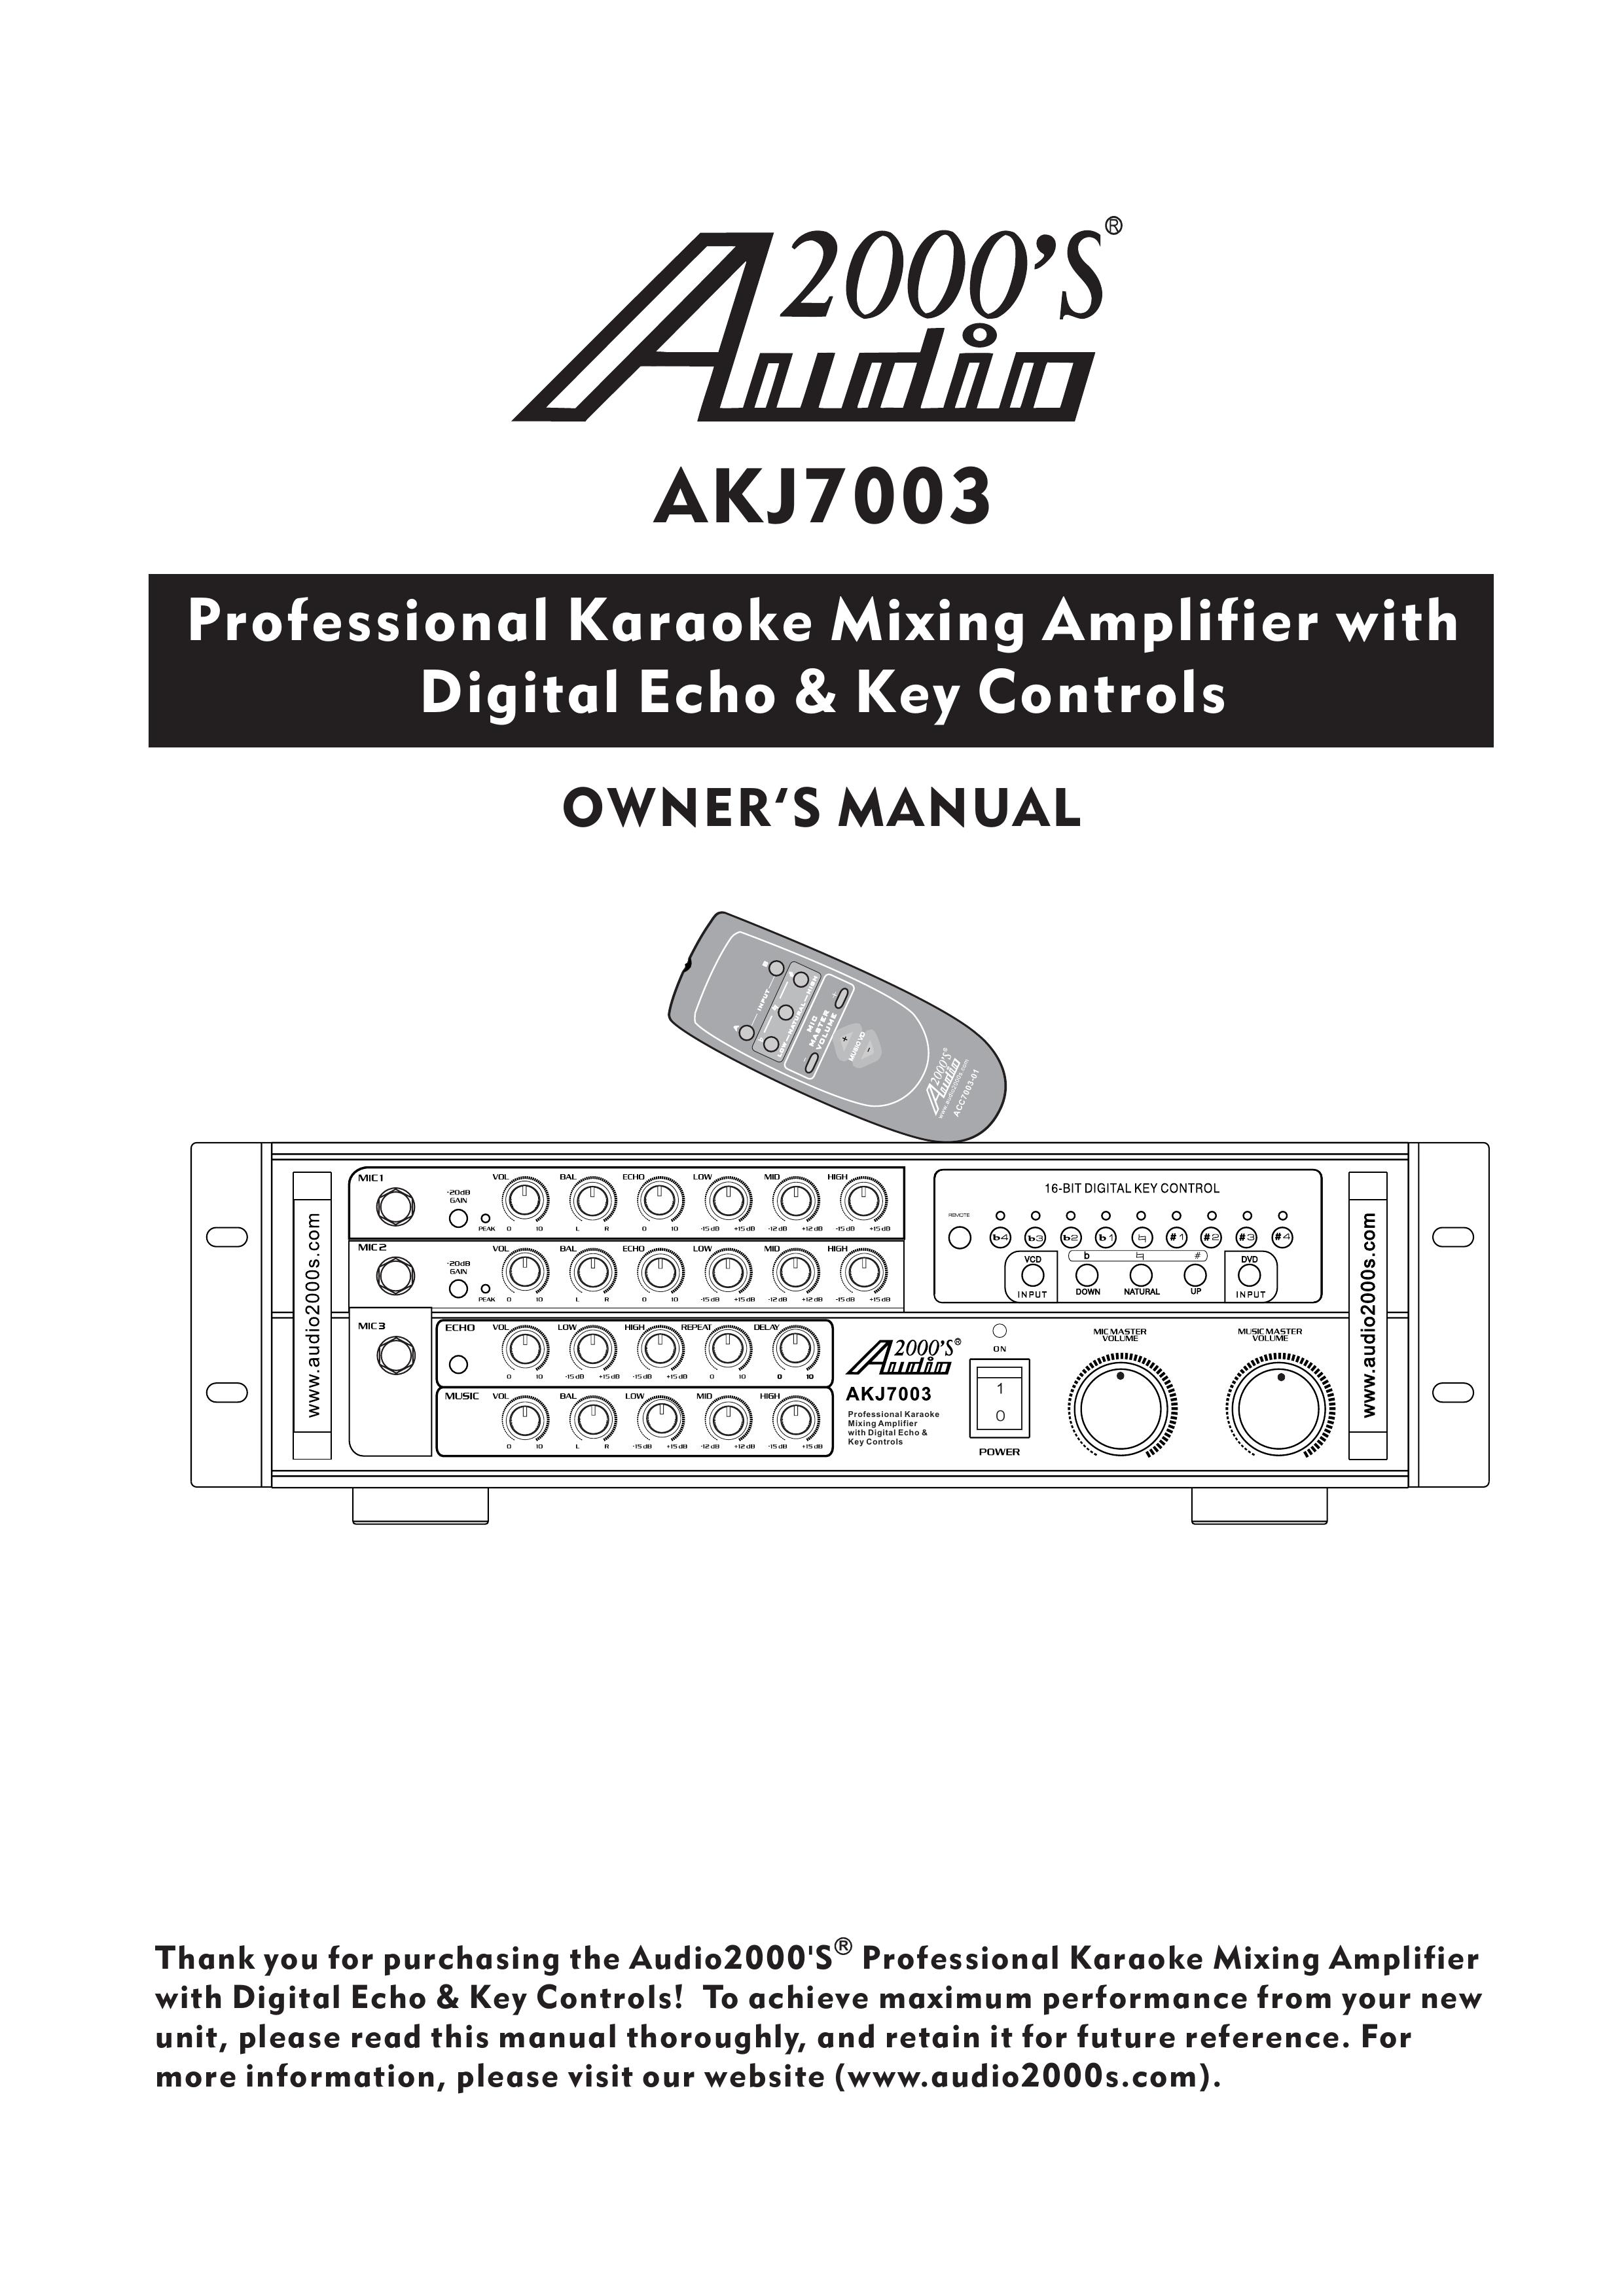 Audio2000's AKJ7003 Karaoke Machine User Manual (Page 1)